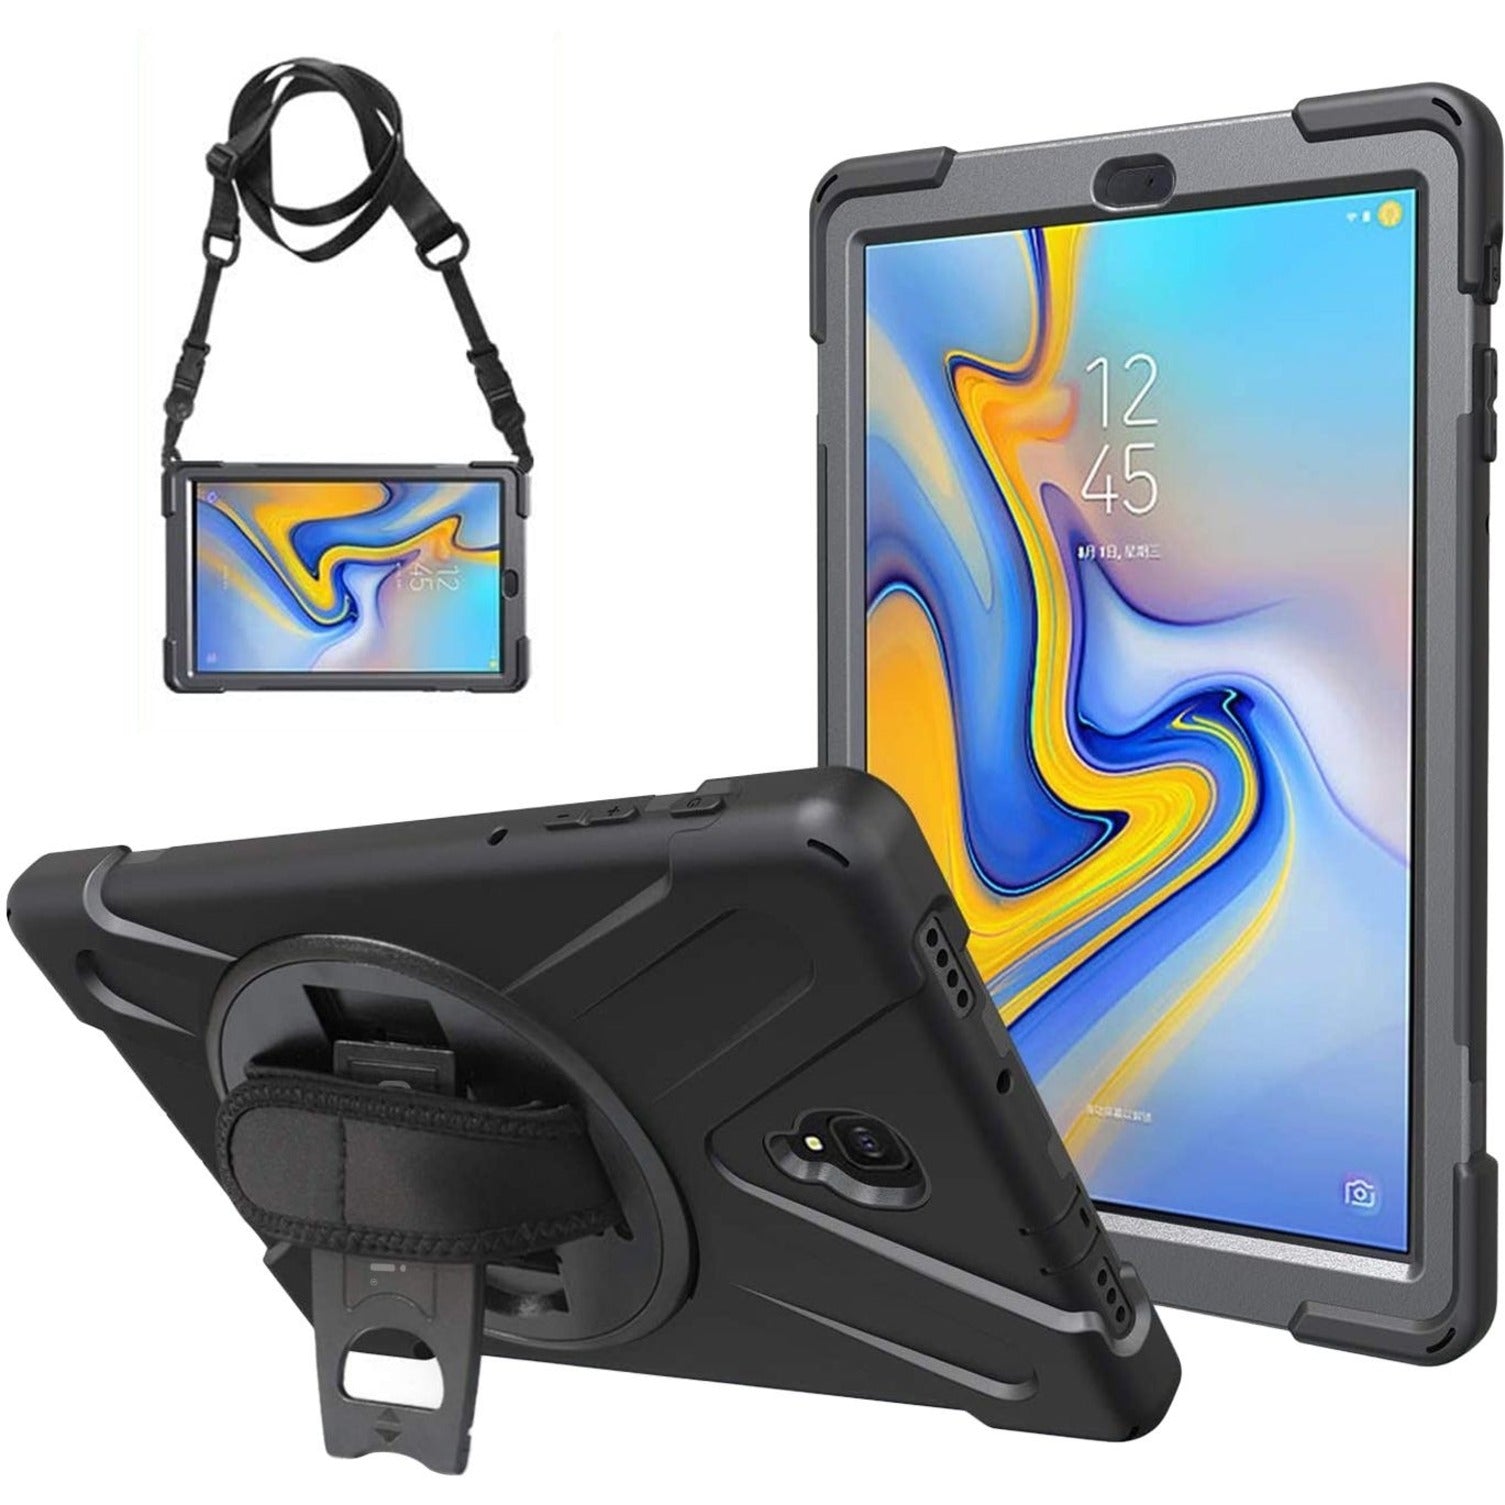 CODi C30705034 Rugged Case for Samsung Galaxy Tab A 10.5 - SM-T590/T595, Black, Bump Resistant, Drop Resistant, Shock Absorbing